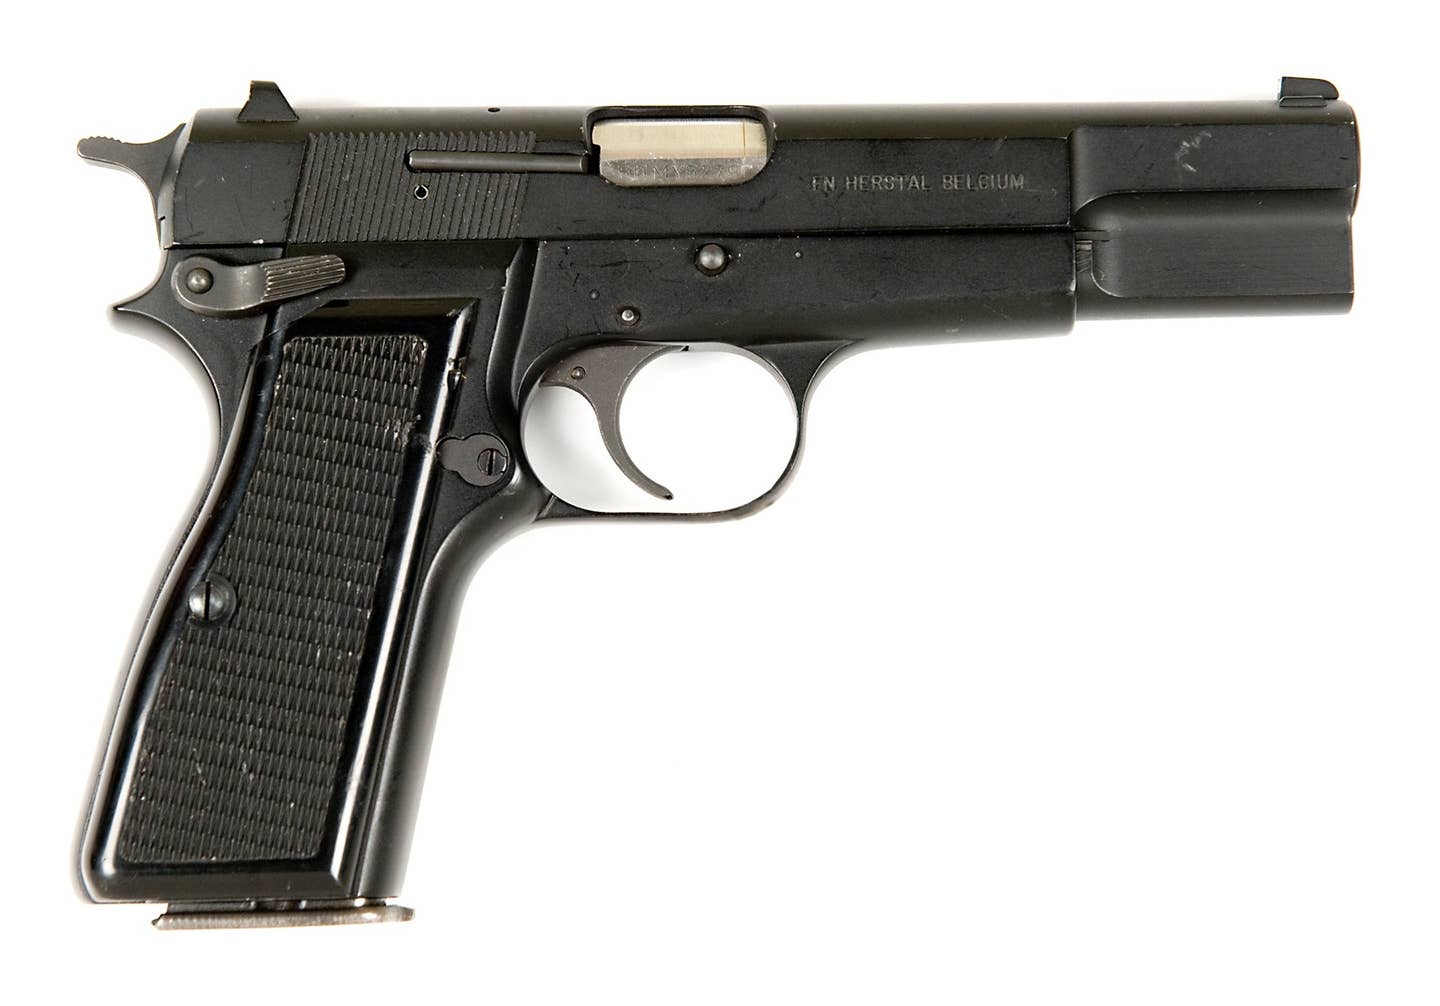 A&nbsp;Browning Hi-Power, manufactured by&nbsp;FN Herstal. <em>U.S. Bureau of Alcohol, Tobacco, Firearms and Explosives&nbsp;</em>